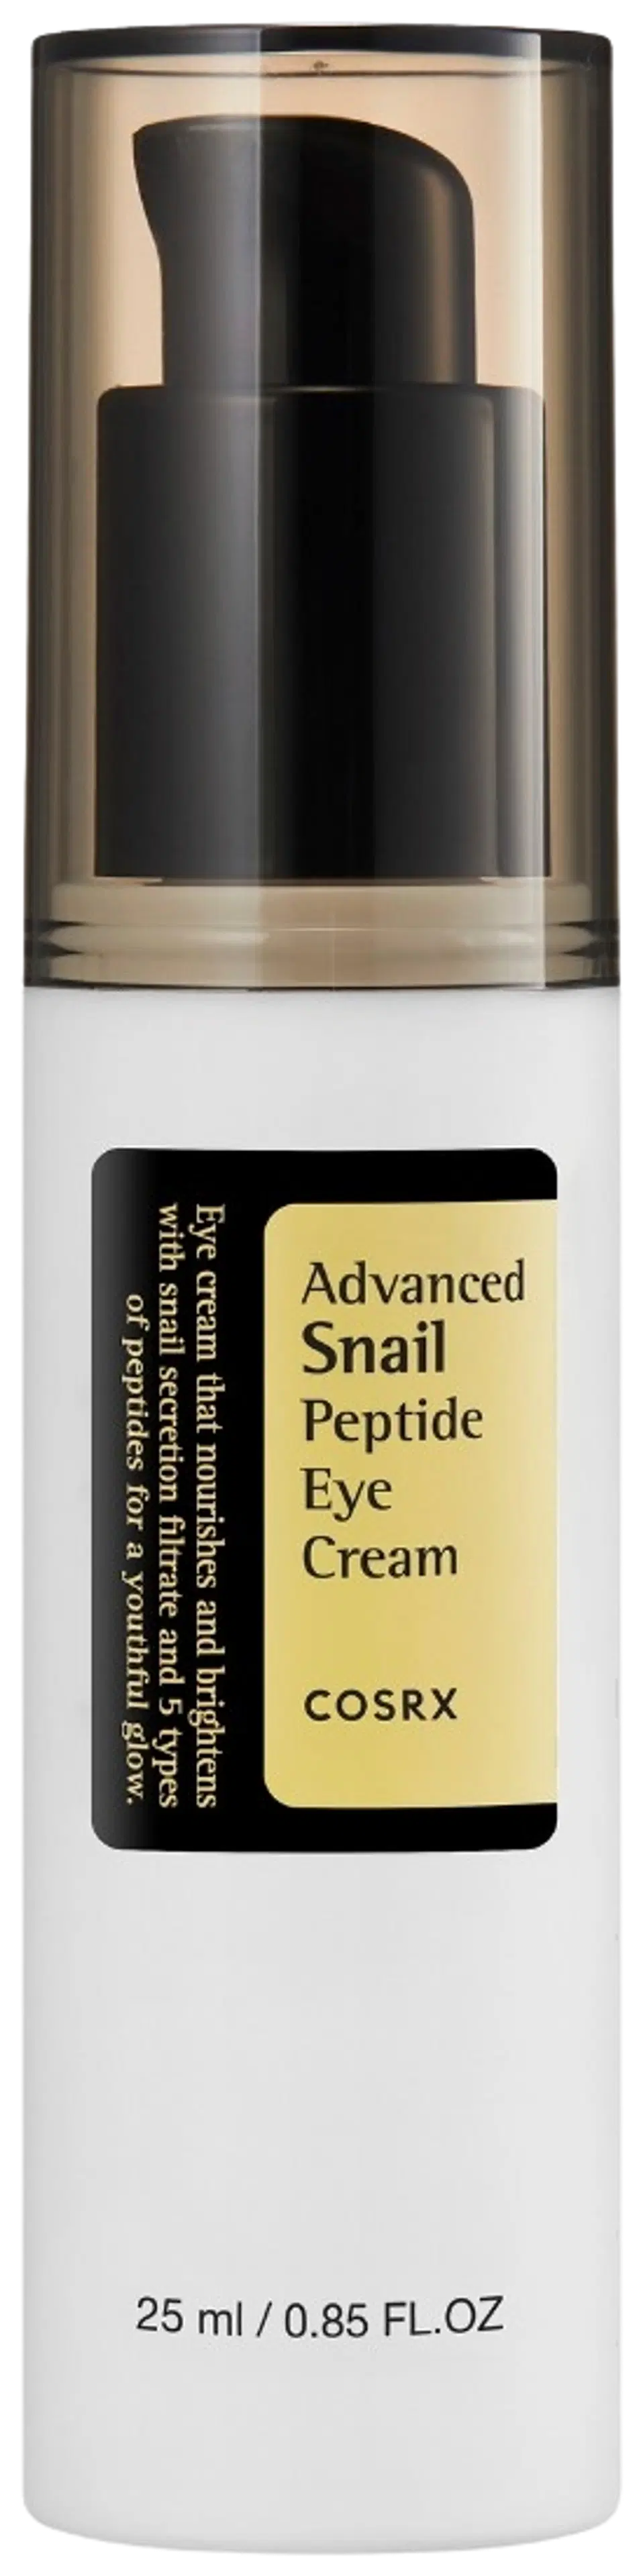 COSRX Advanced Snail Peptide Eye Cream silmänympärysvoide 25 ml